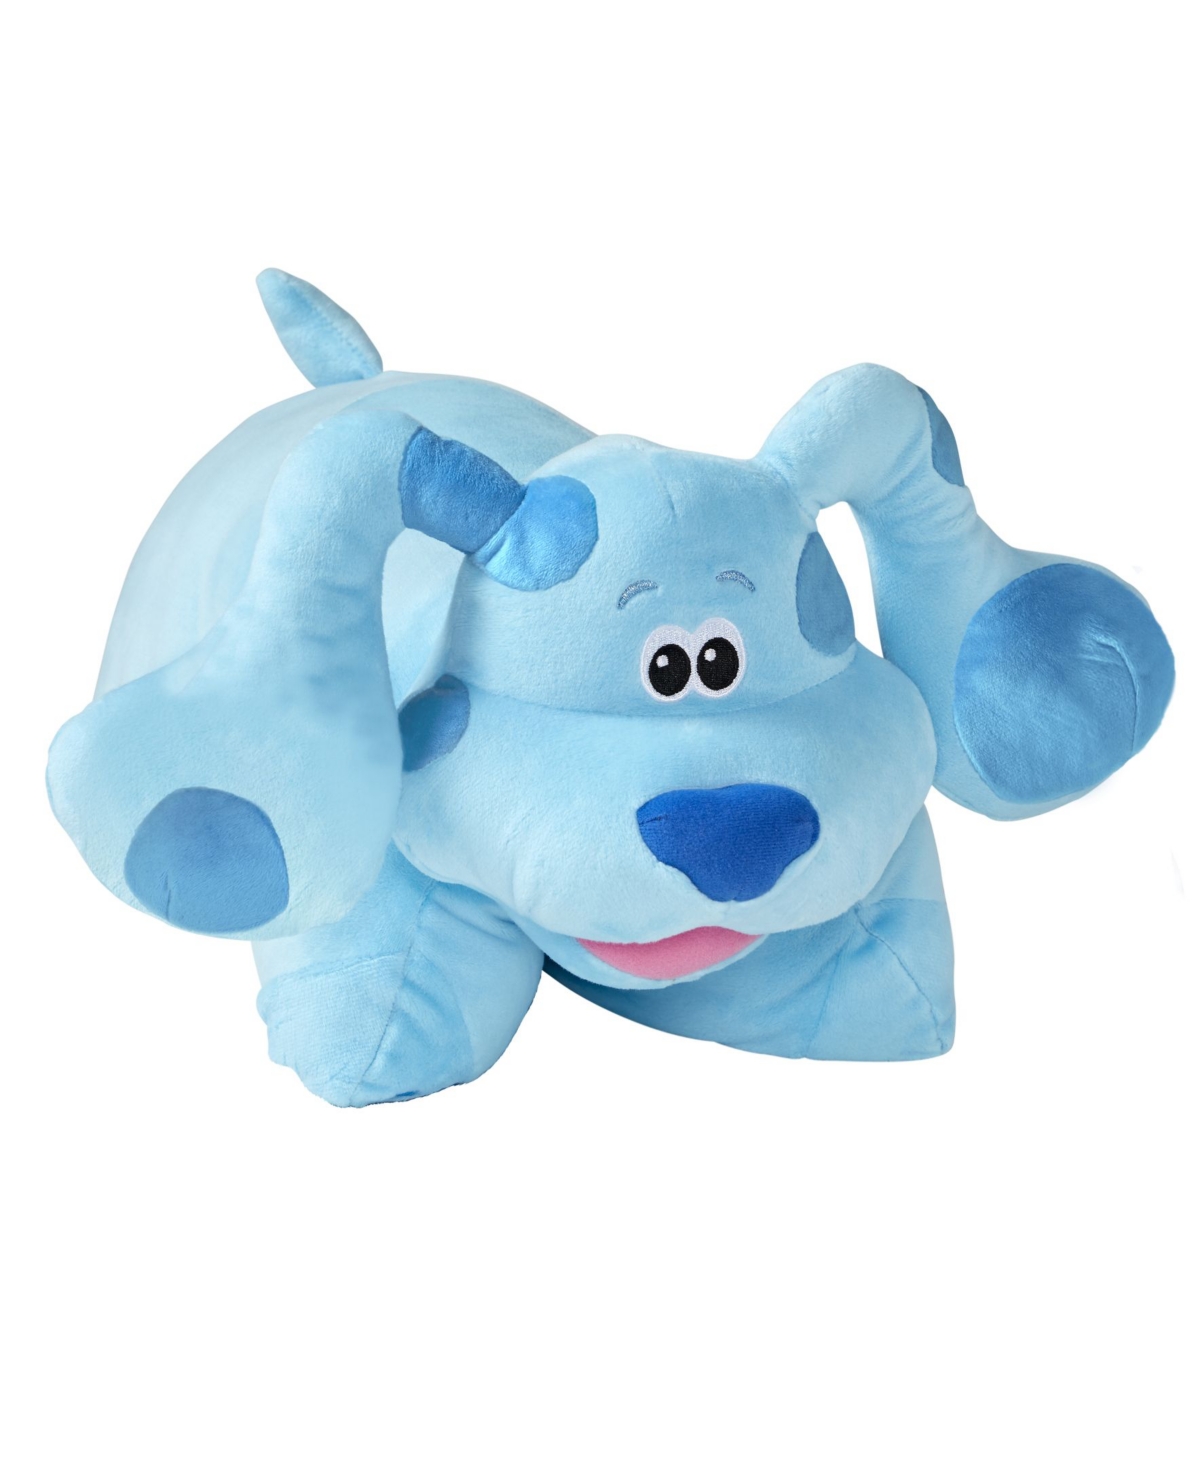 Pillow Pets Kids' Nickelodeon Blues Clues Stuffed Animal Plush Toy